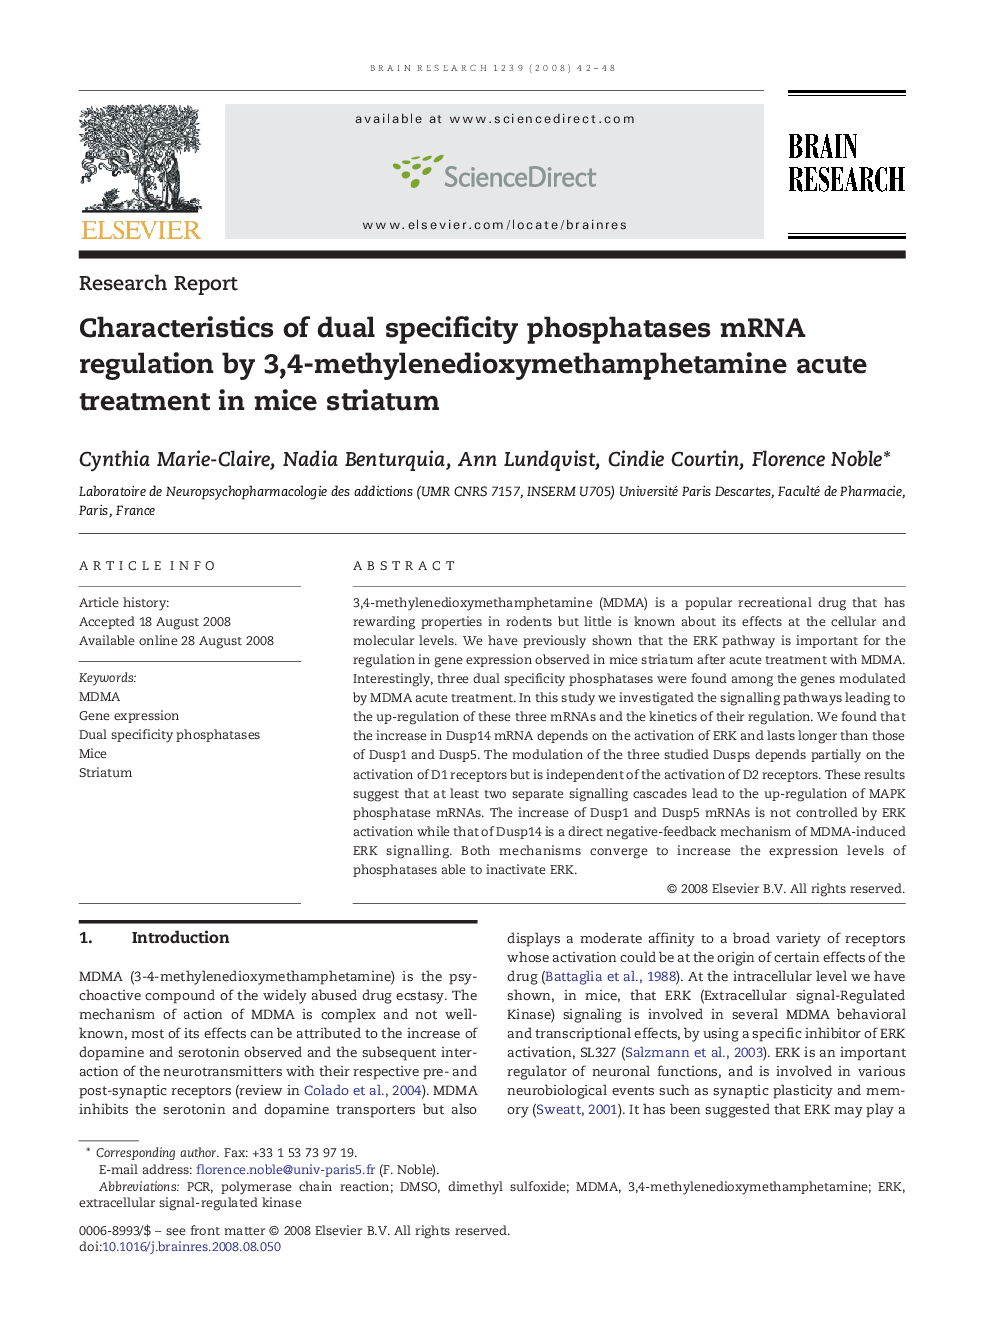 Characteristics of dual specificity phosphatases mRNA regulation by 3,4-methylenedioxymethamphetamine acute treatment in mice striatum